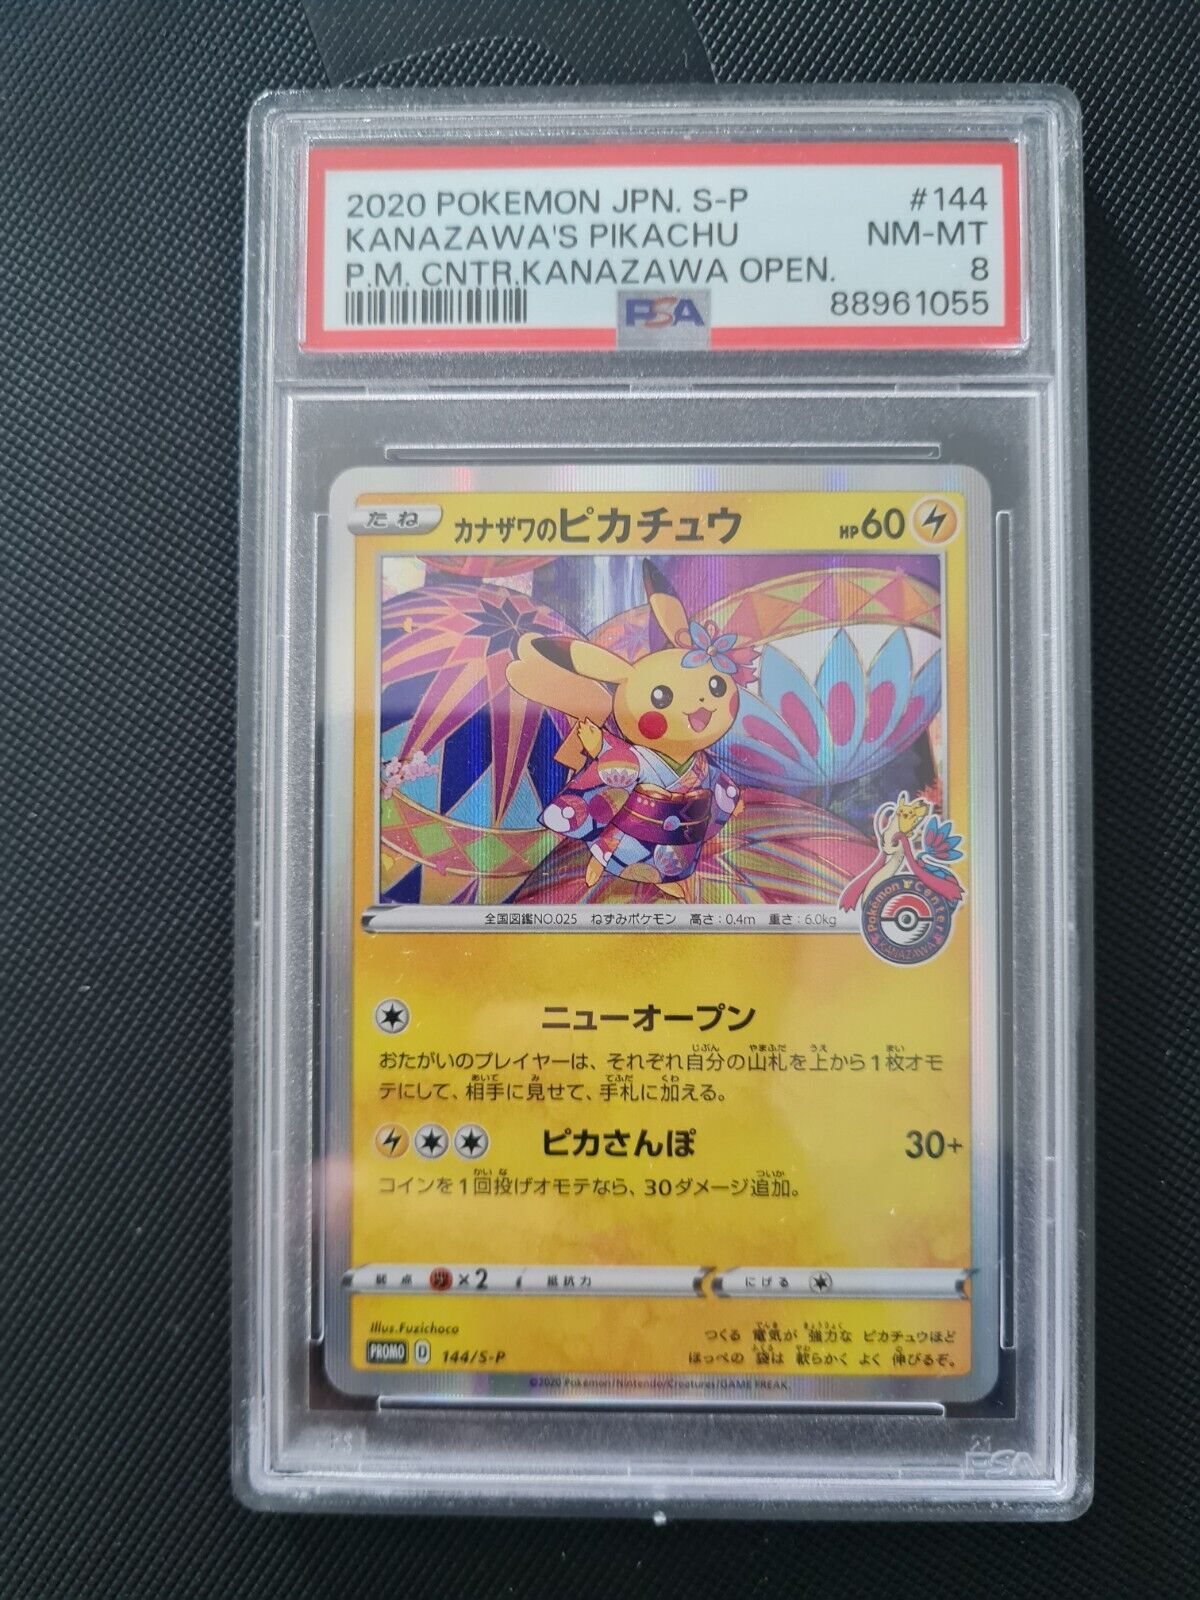 Pokemon Card - Kanazawa Pikachu 144/S-P Promo Japanese Holo Rare - PSA 8